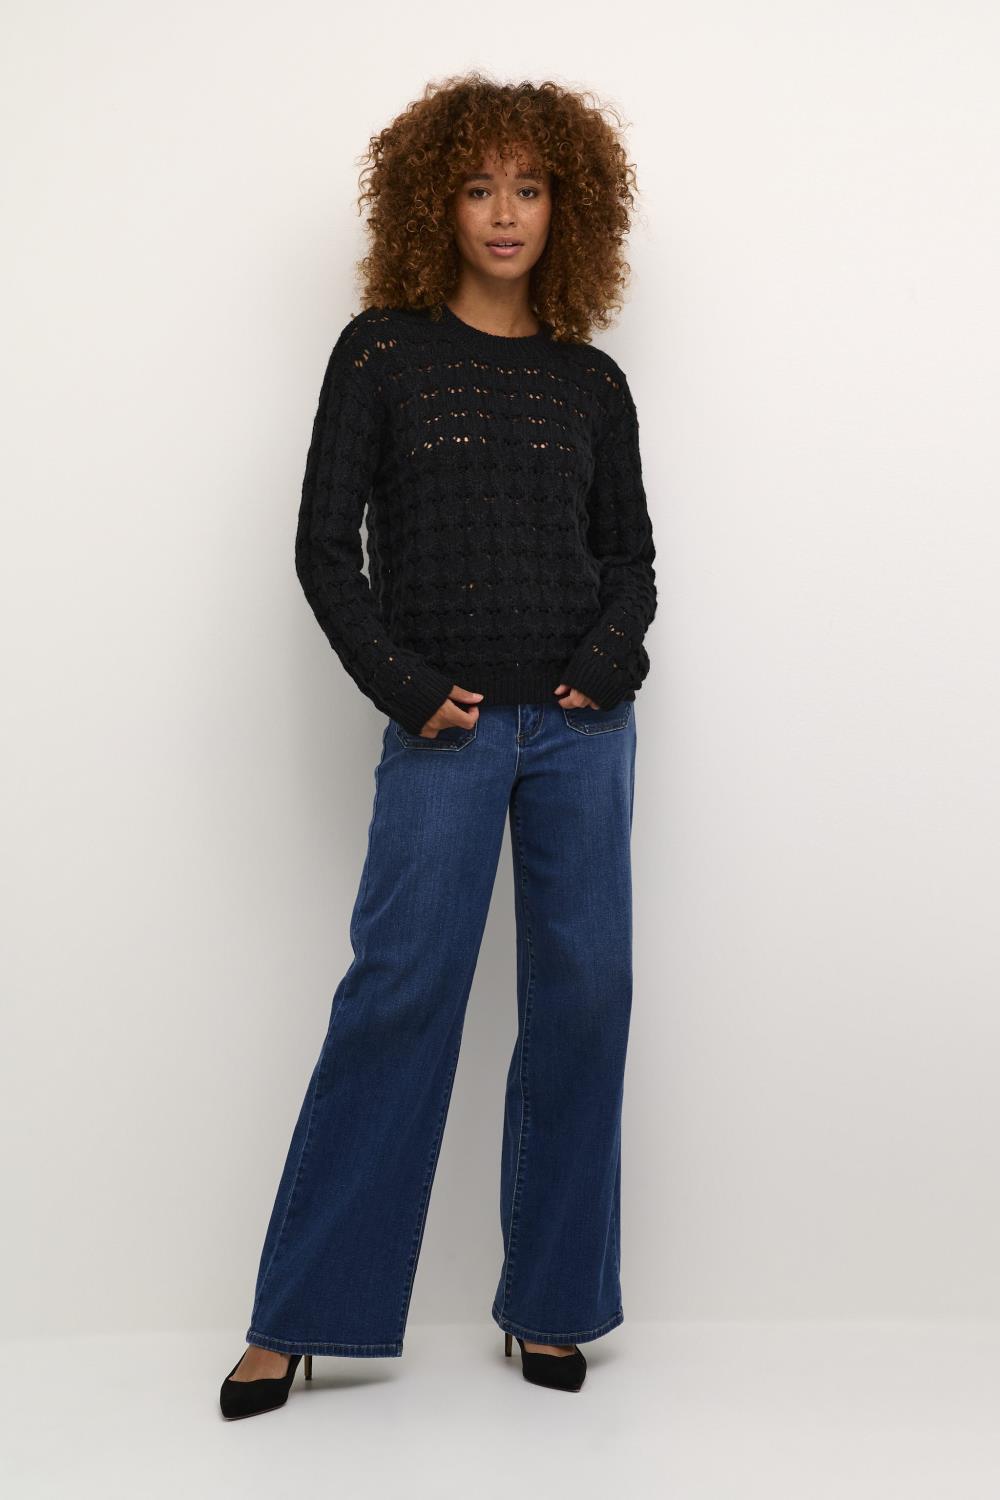 KAelena Knit Pullover, Black Deep